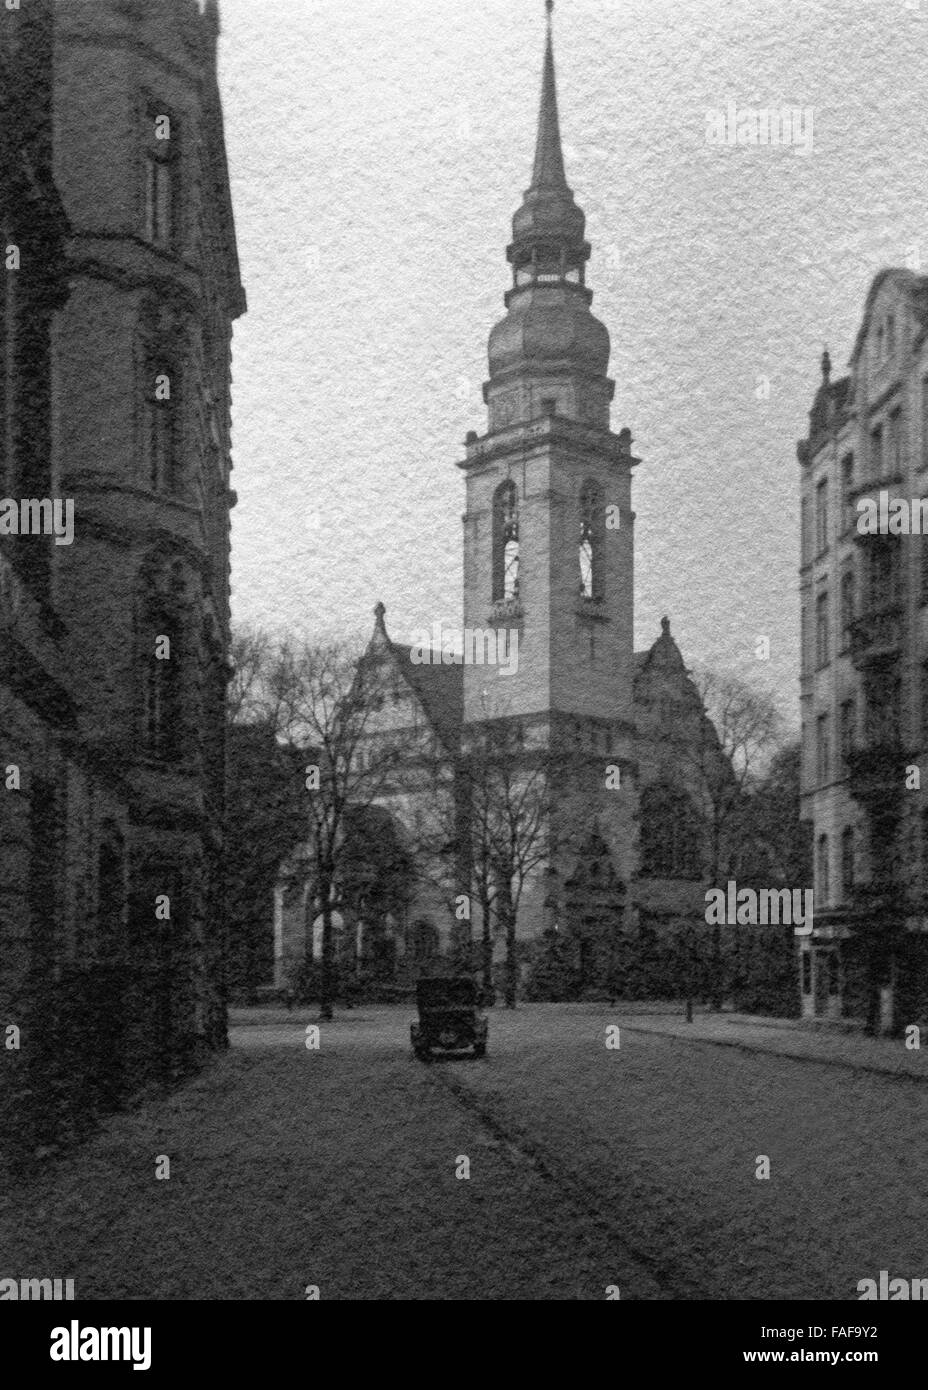 Die Lutherkirche in der Südstadt von Köln, Deutschland 1920er Jahre. Chiesa di Lutero nella parte meridionale della città di Colonia, Germania 1920s. Foto Stock